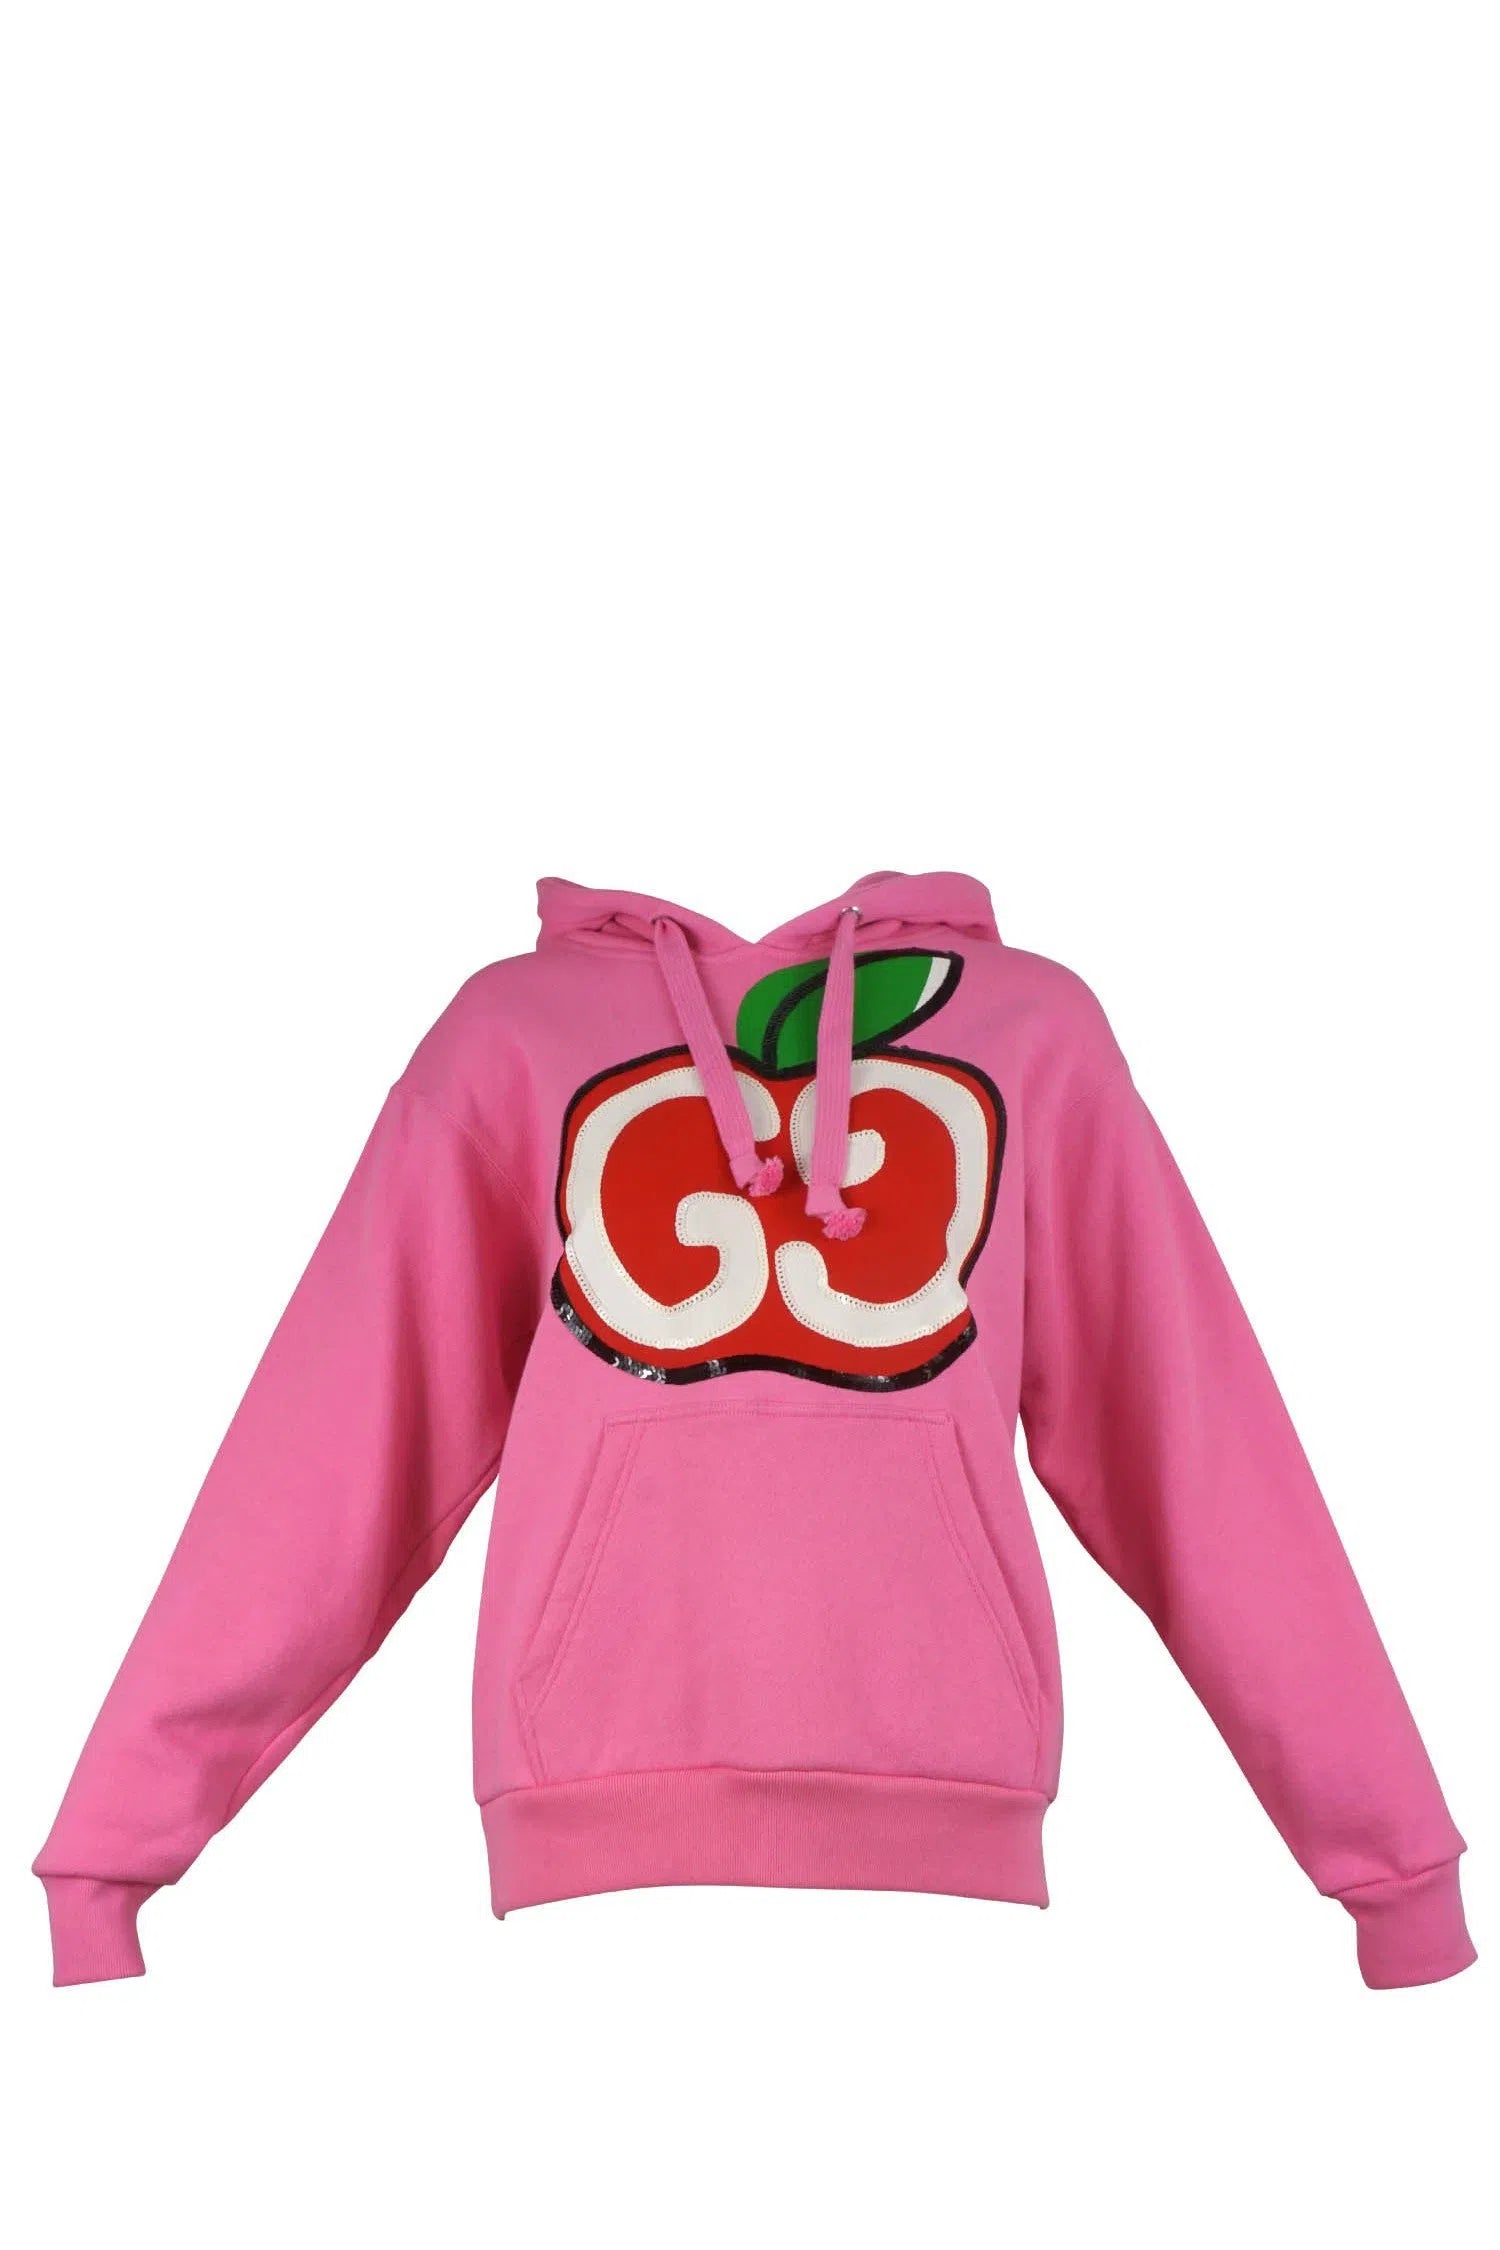 Gucci GG Apple Cotton Hooded Sweatshirt